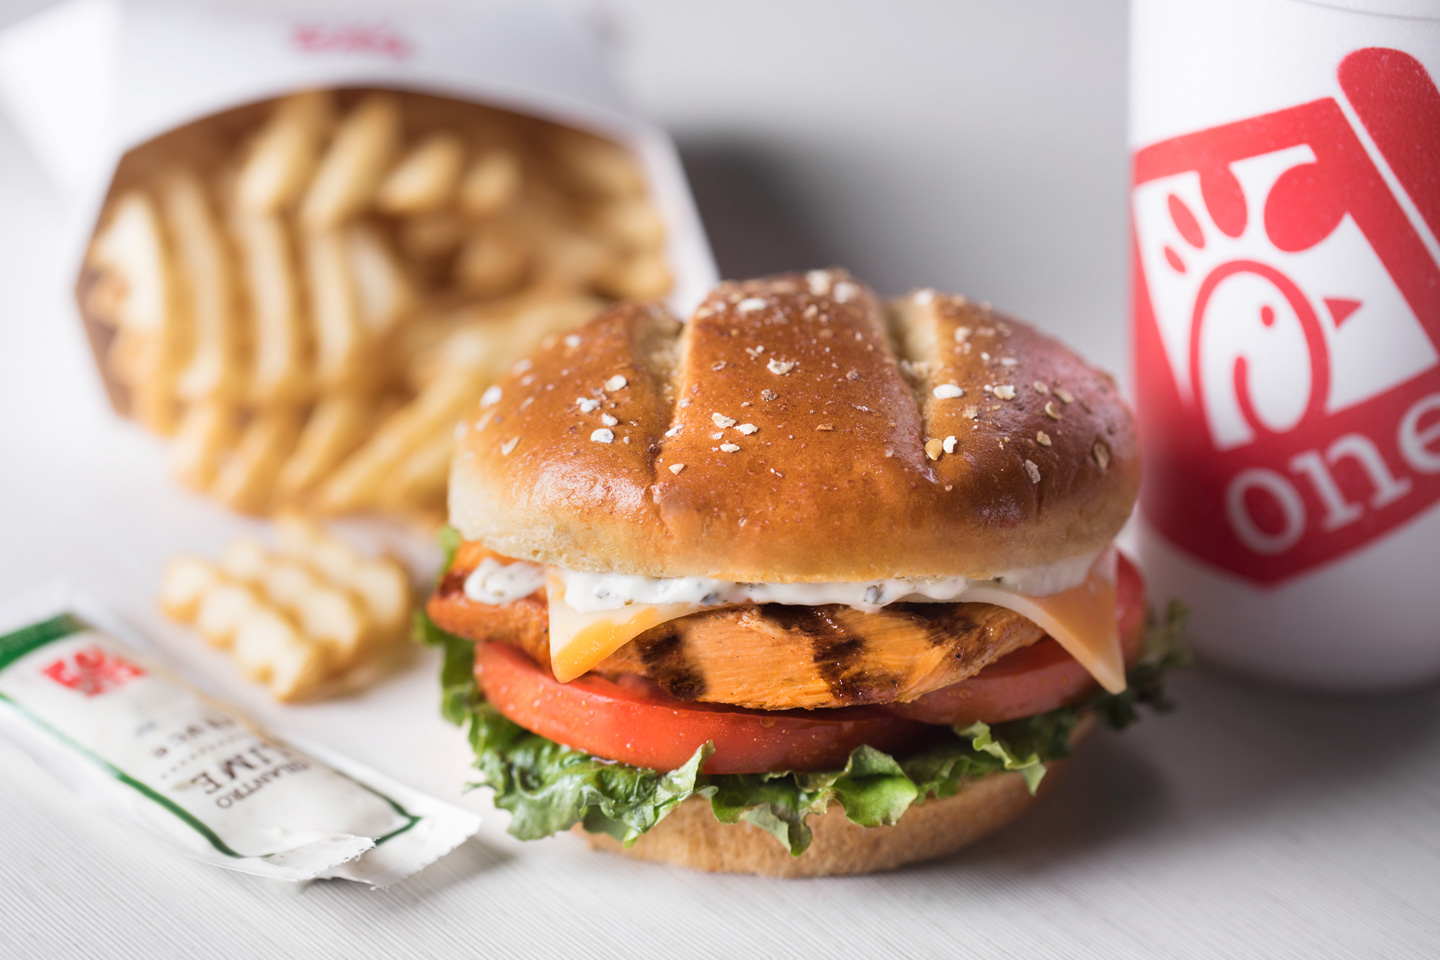 ChickfilA Has New Spicy Chicken Sandwich, McDonald's Brings Back